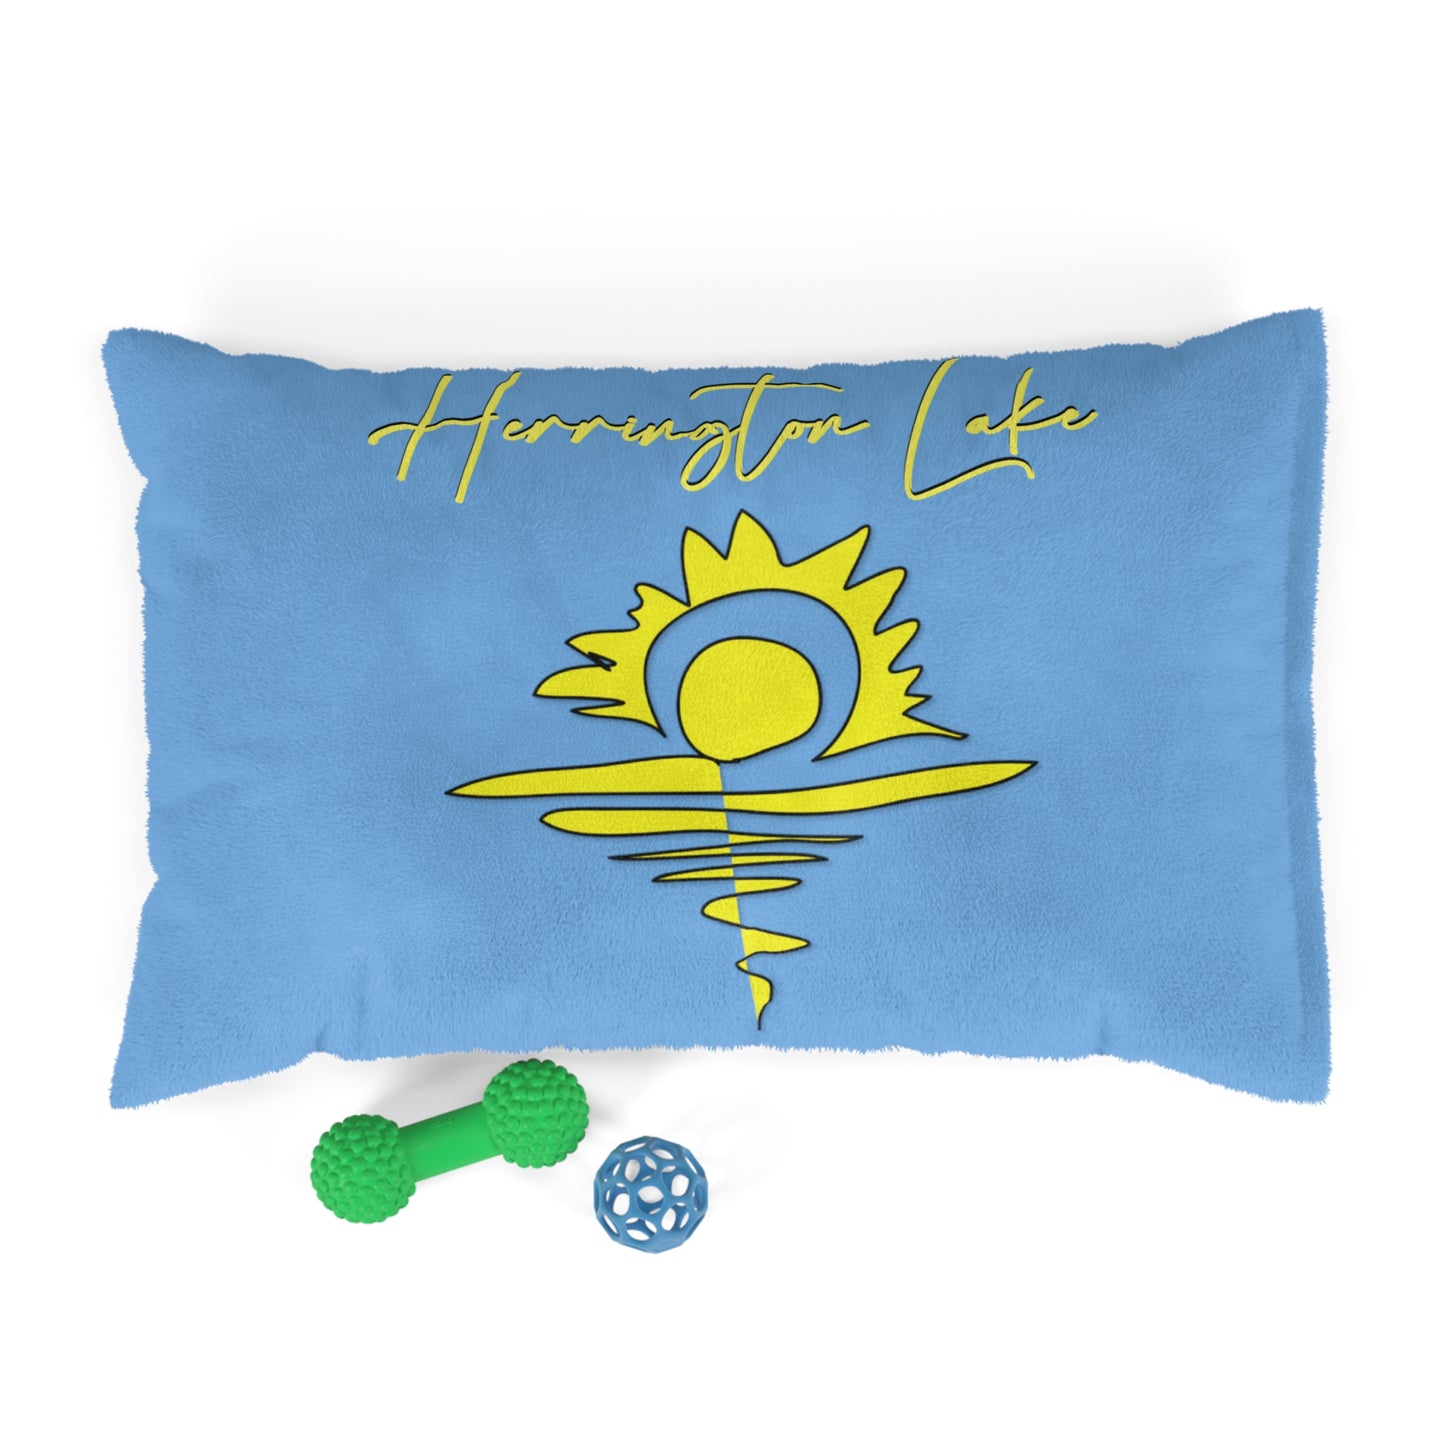 Herrington Lake Sunny Day Pet Bed, Light Blue